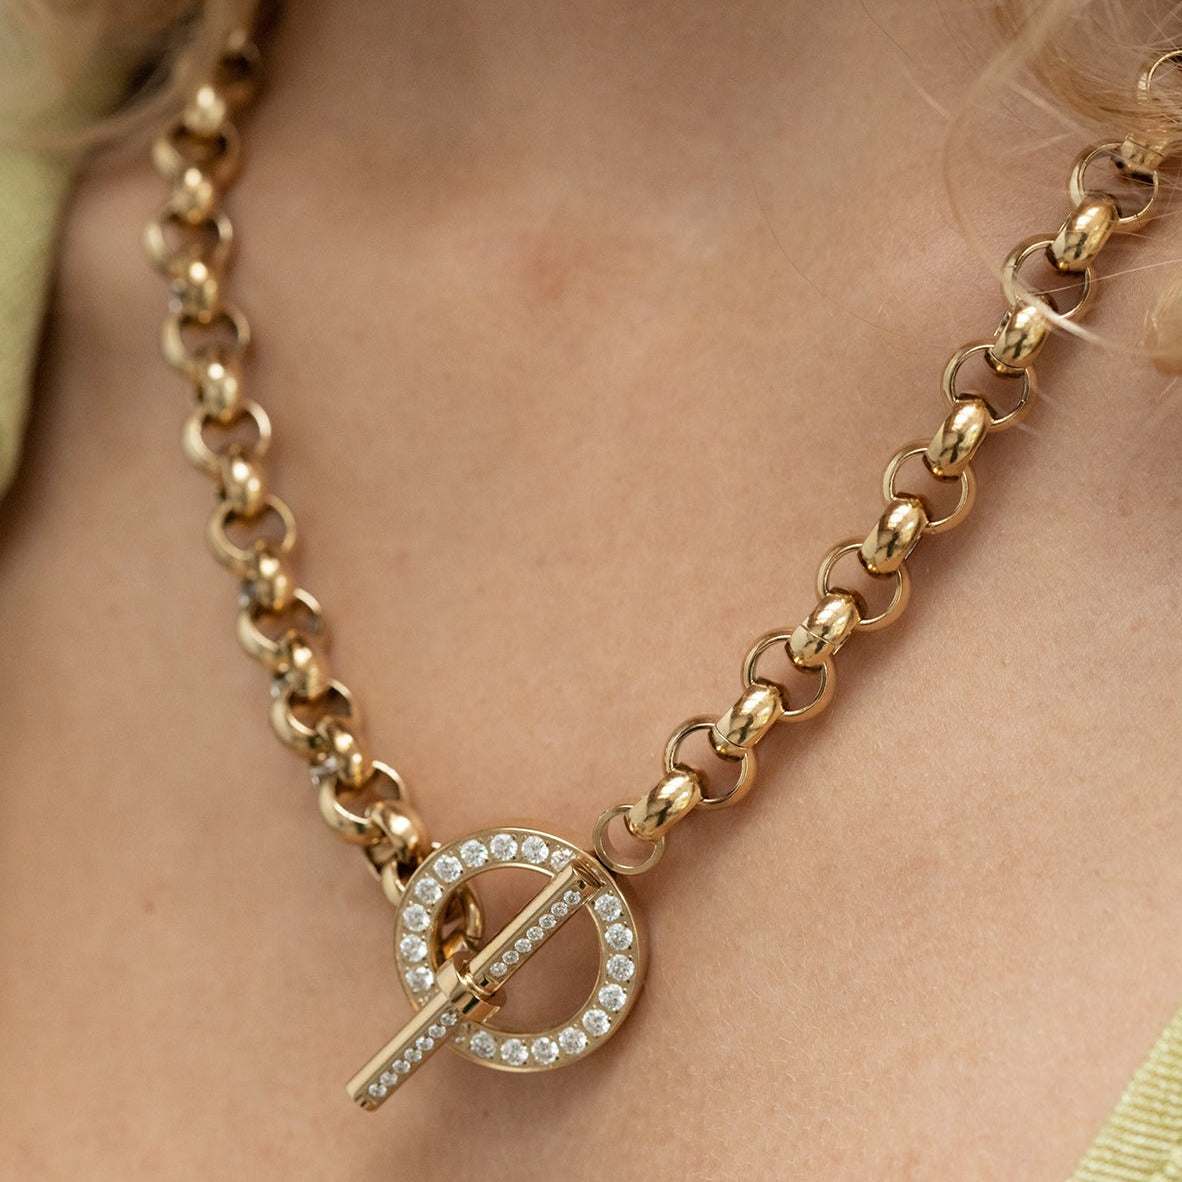 Ceccano Deluxe Necklace in Gold